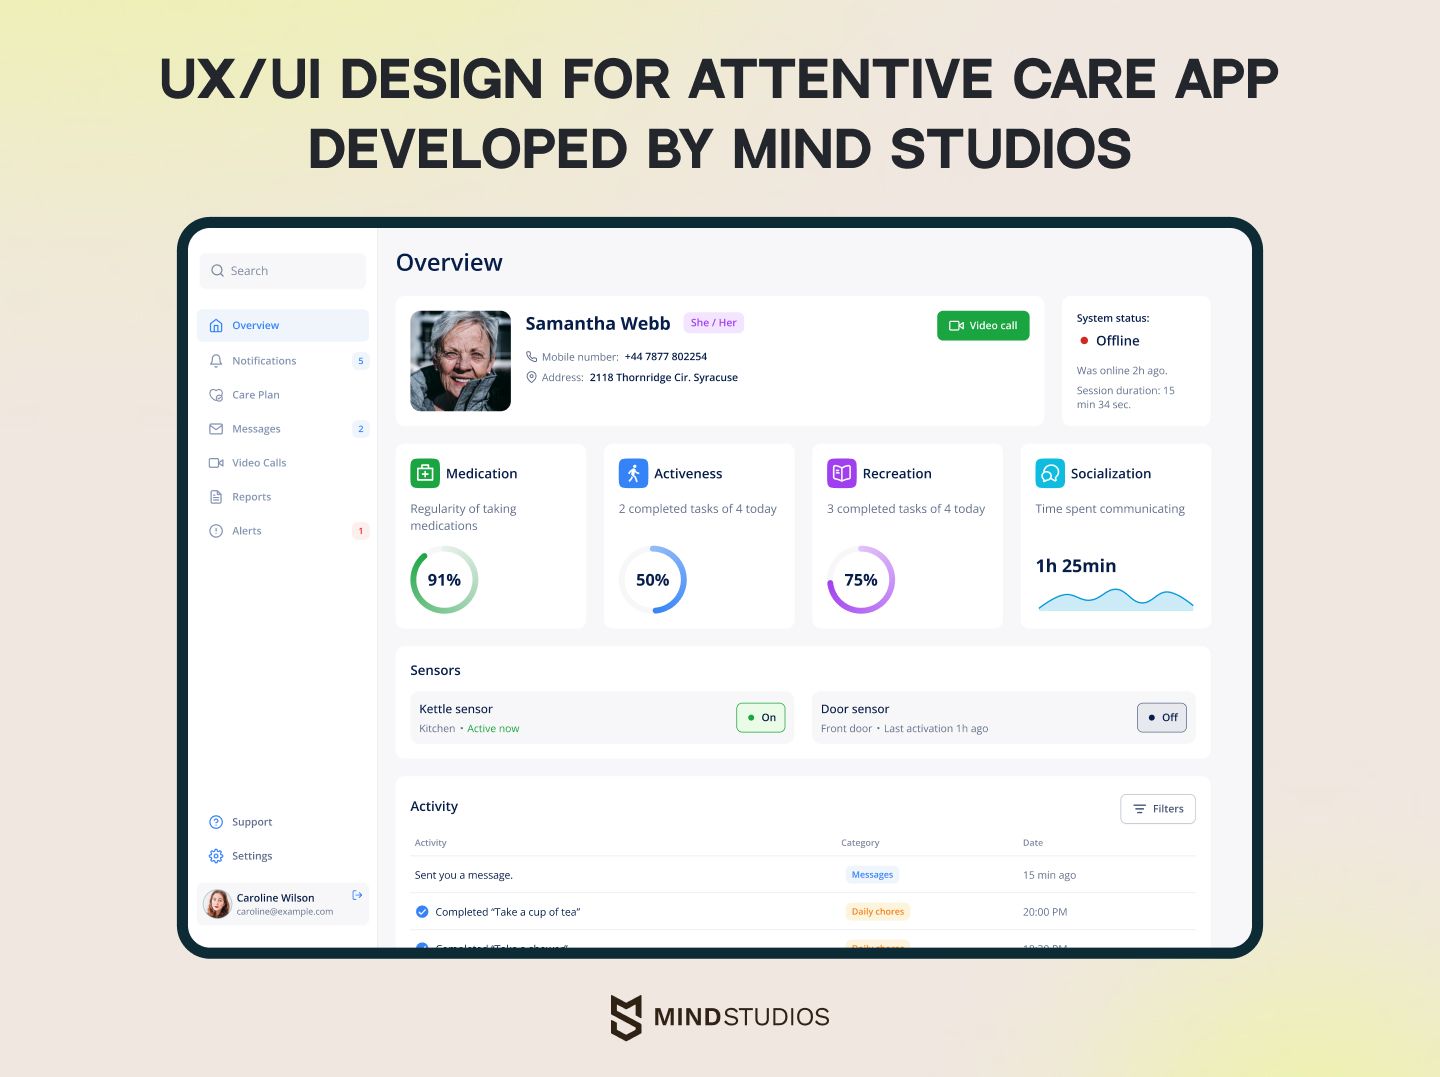 UX/UI design for Attentive Care app developed by Mind Studios